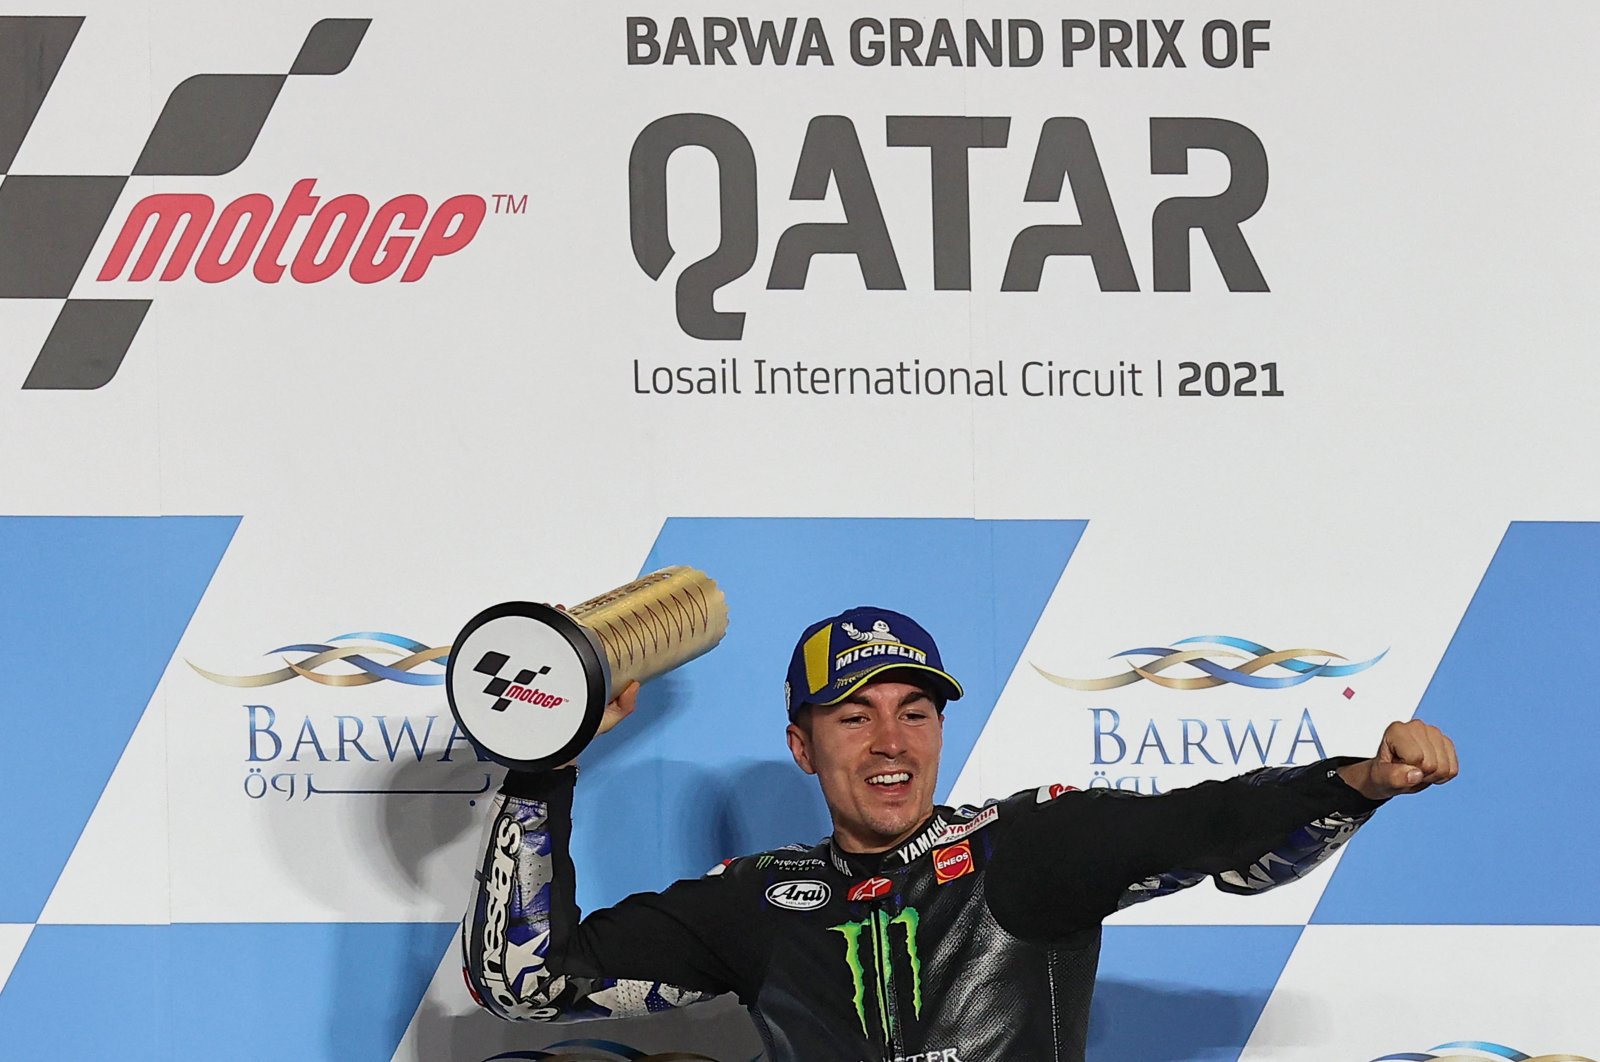 Monster Energy Yamaha MotoGP's Spanish rider Maverick Vinales celebrates winning the Qatar Grand Prix at the Losail International Circuit, Lusail, Qatar, March 28, 2021. (AFP Photo)